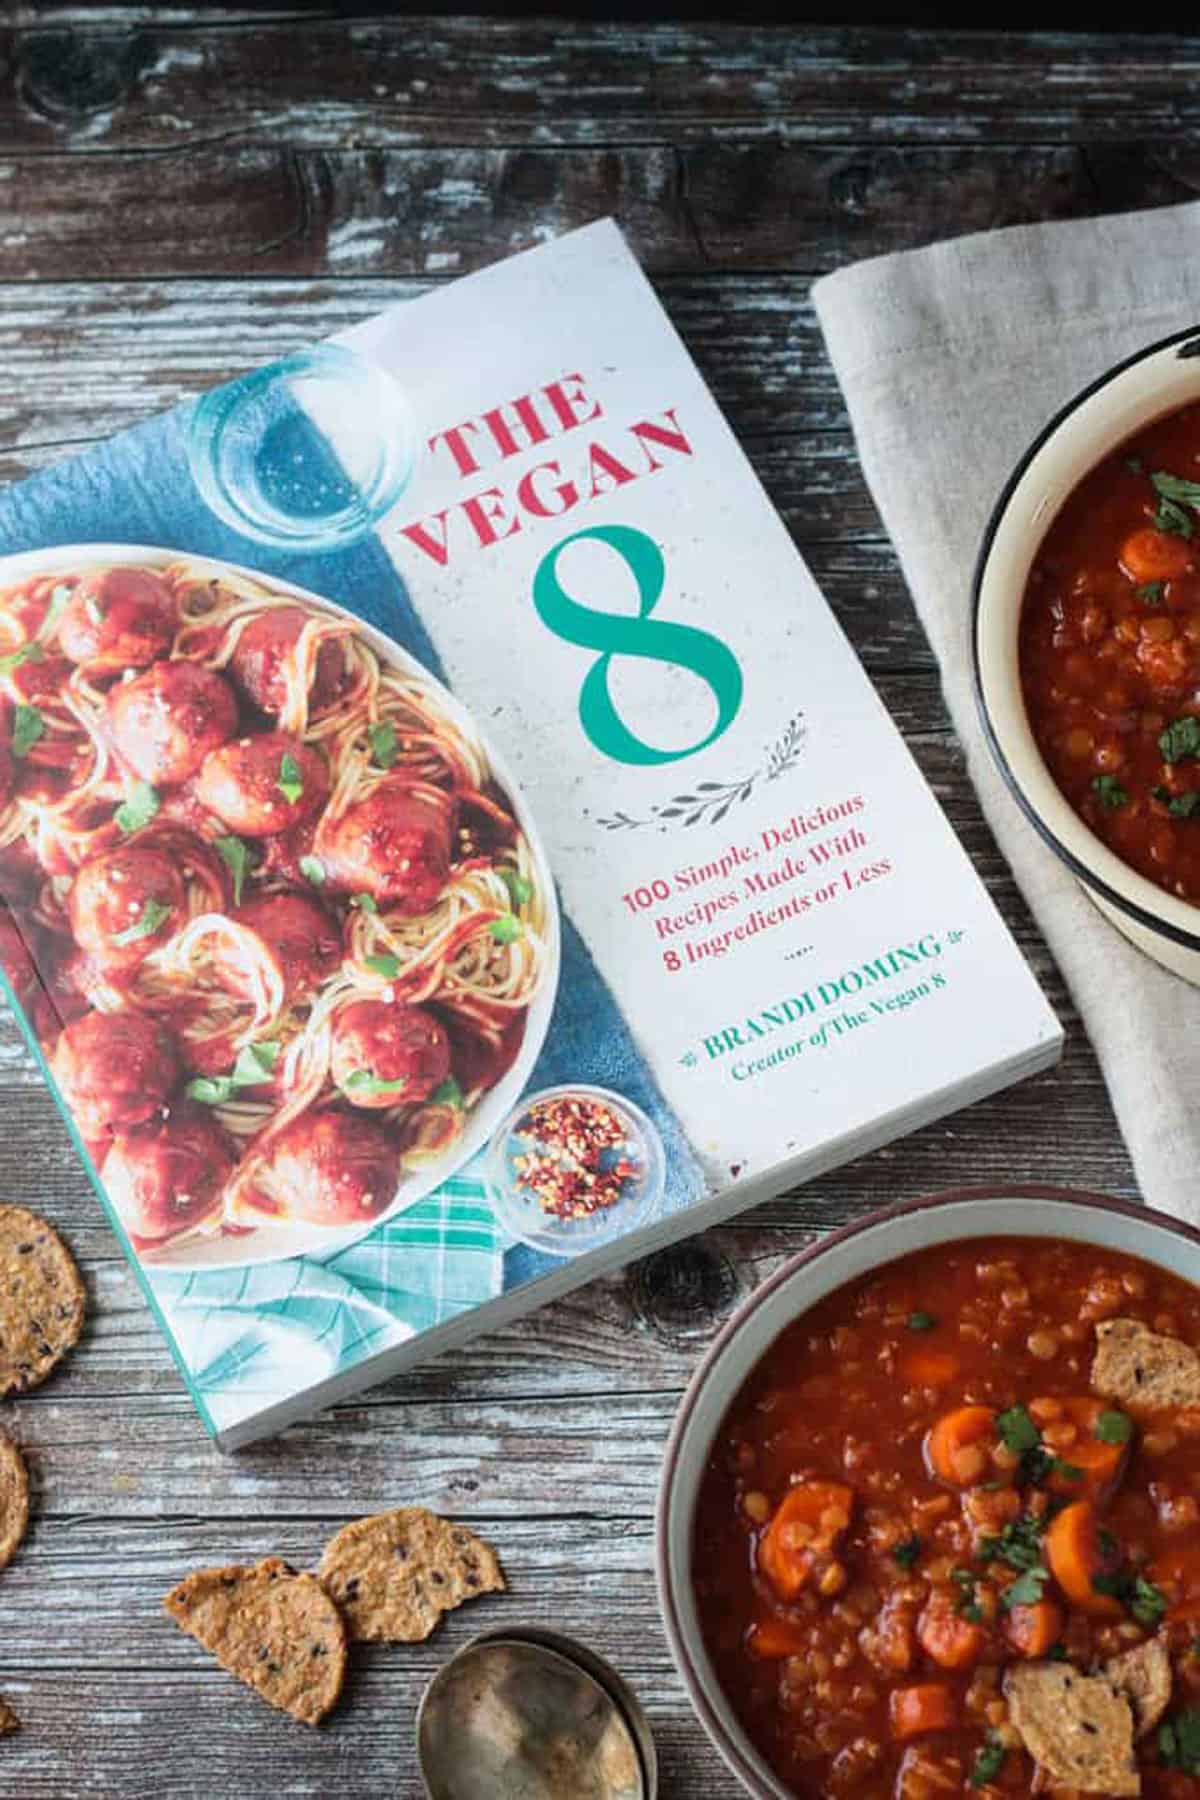 The Vegan 8 cookbook cover.